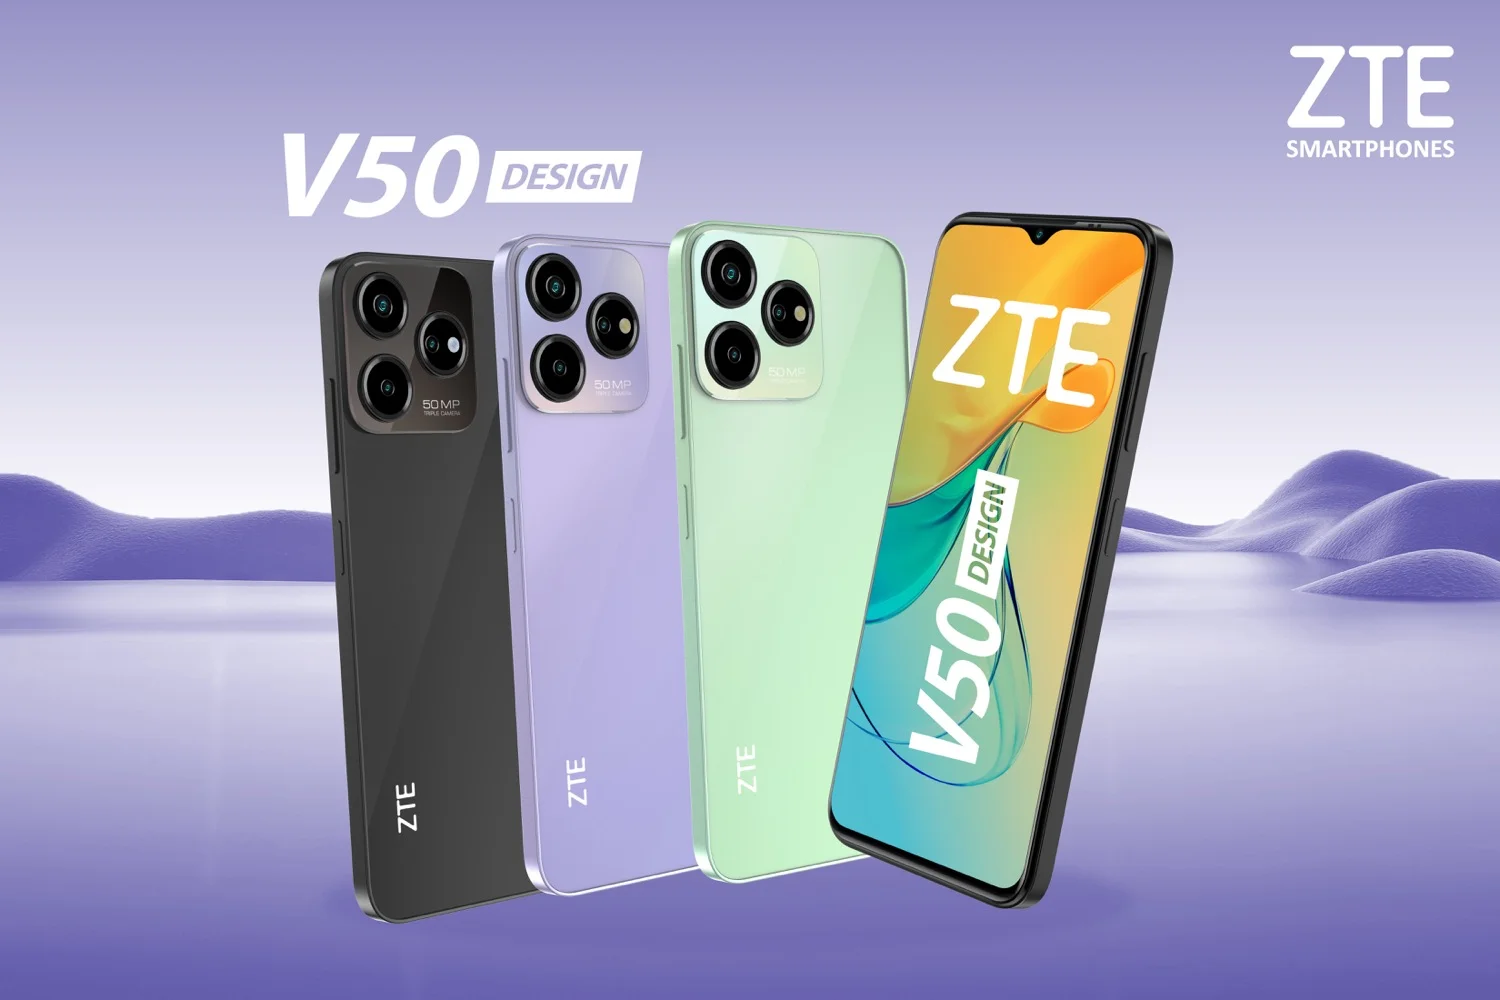 ZTE V50 Design incorpora una gran pantalla y amplia memoria